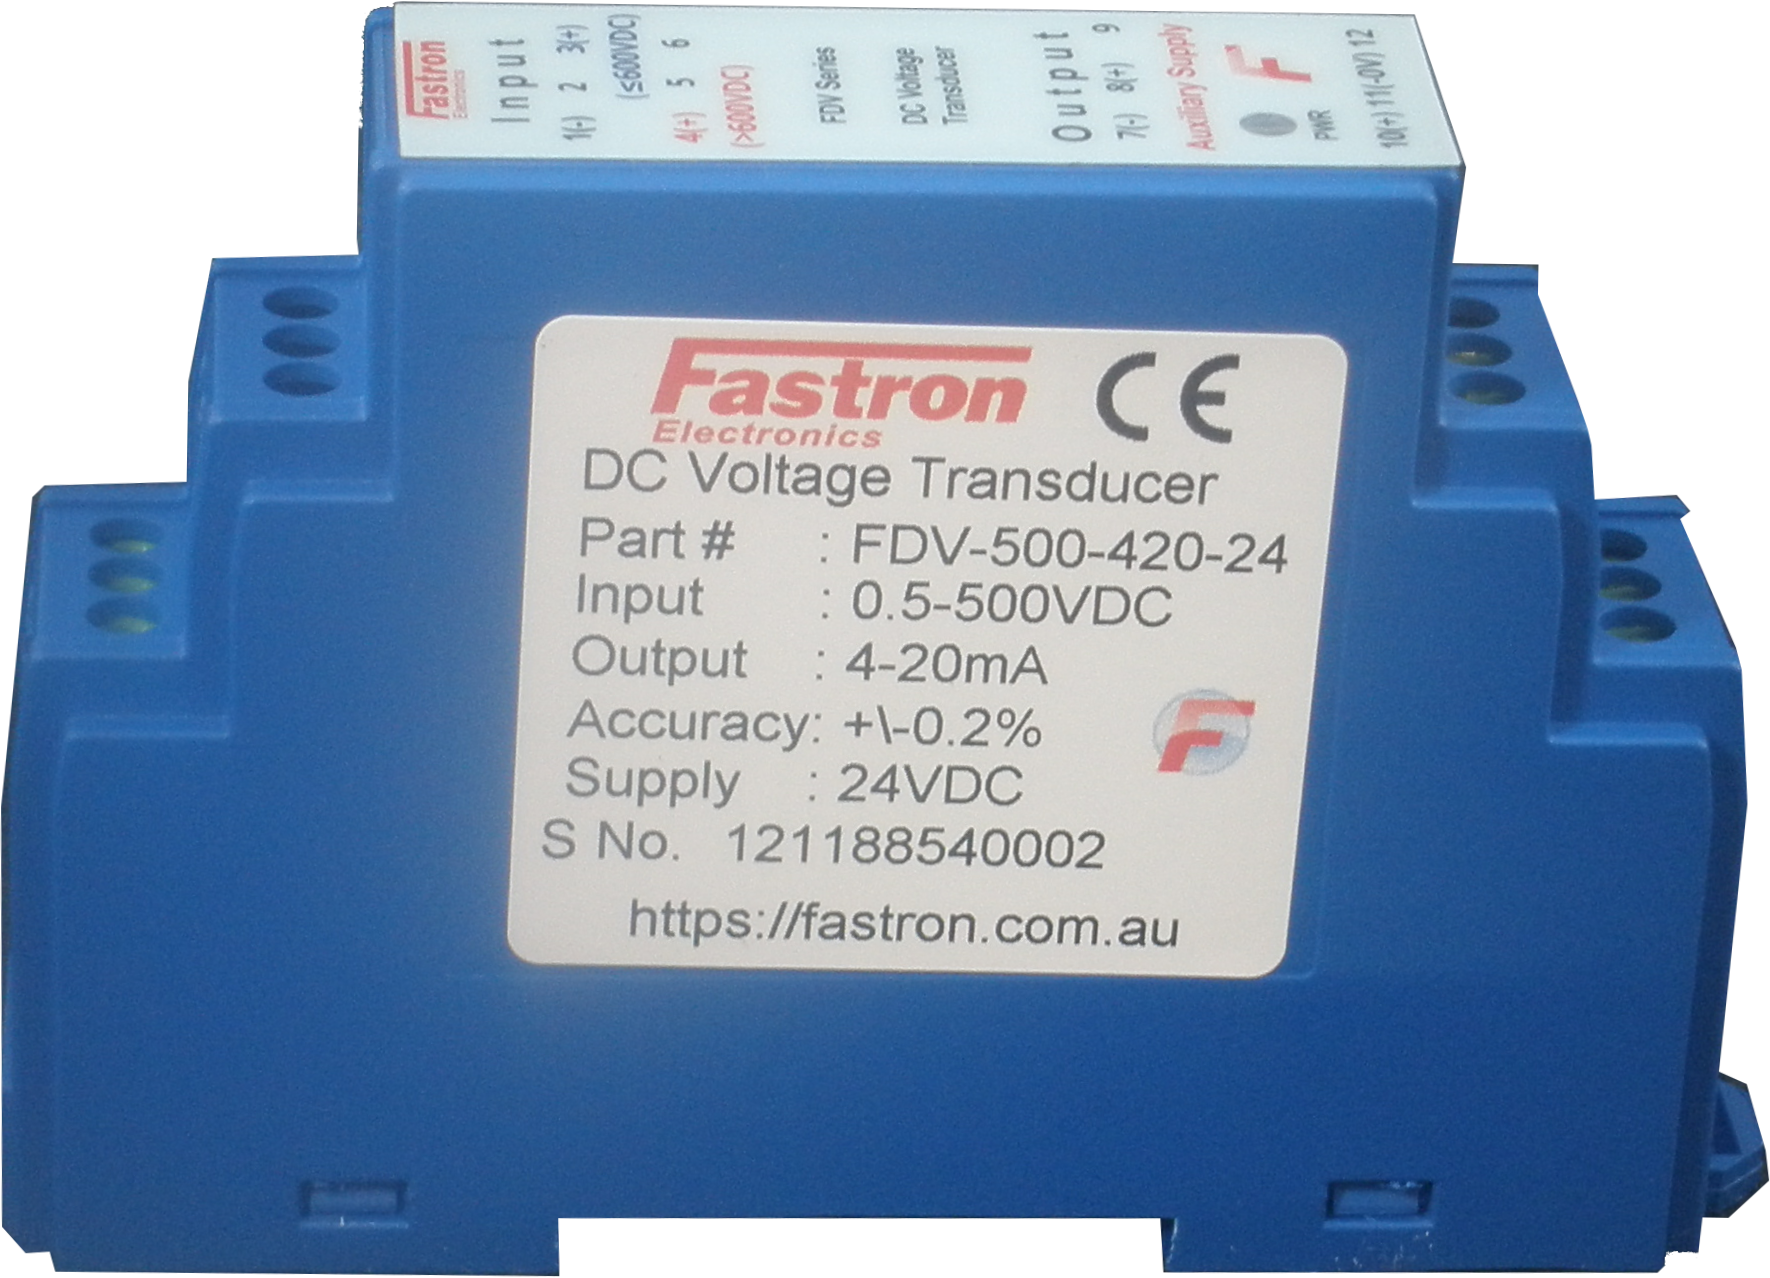 FDV-500-420-24, DC Voltage Transducer, Din Rail Mount, 0-500VDC, 4-20mA output, 24VDC Supply Voltage, 150mS Response